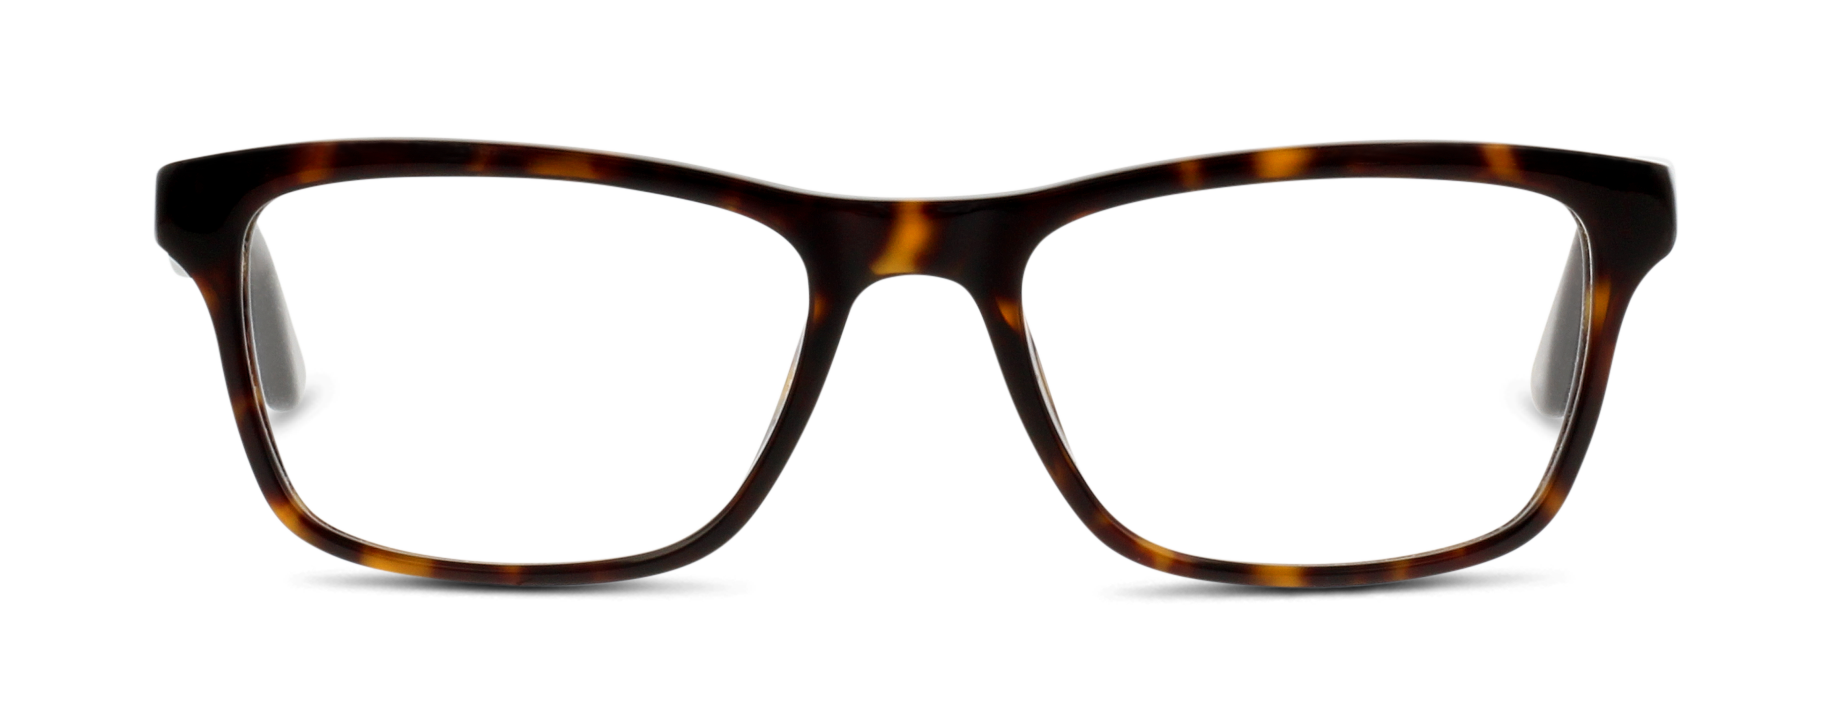 Front Ray-Ban RX 5279 Glasses Transparent / Transparent, Black